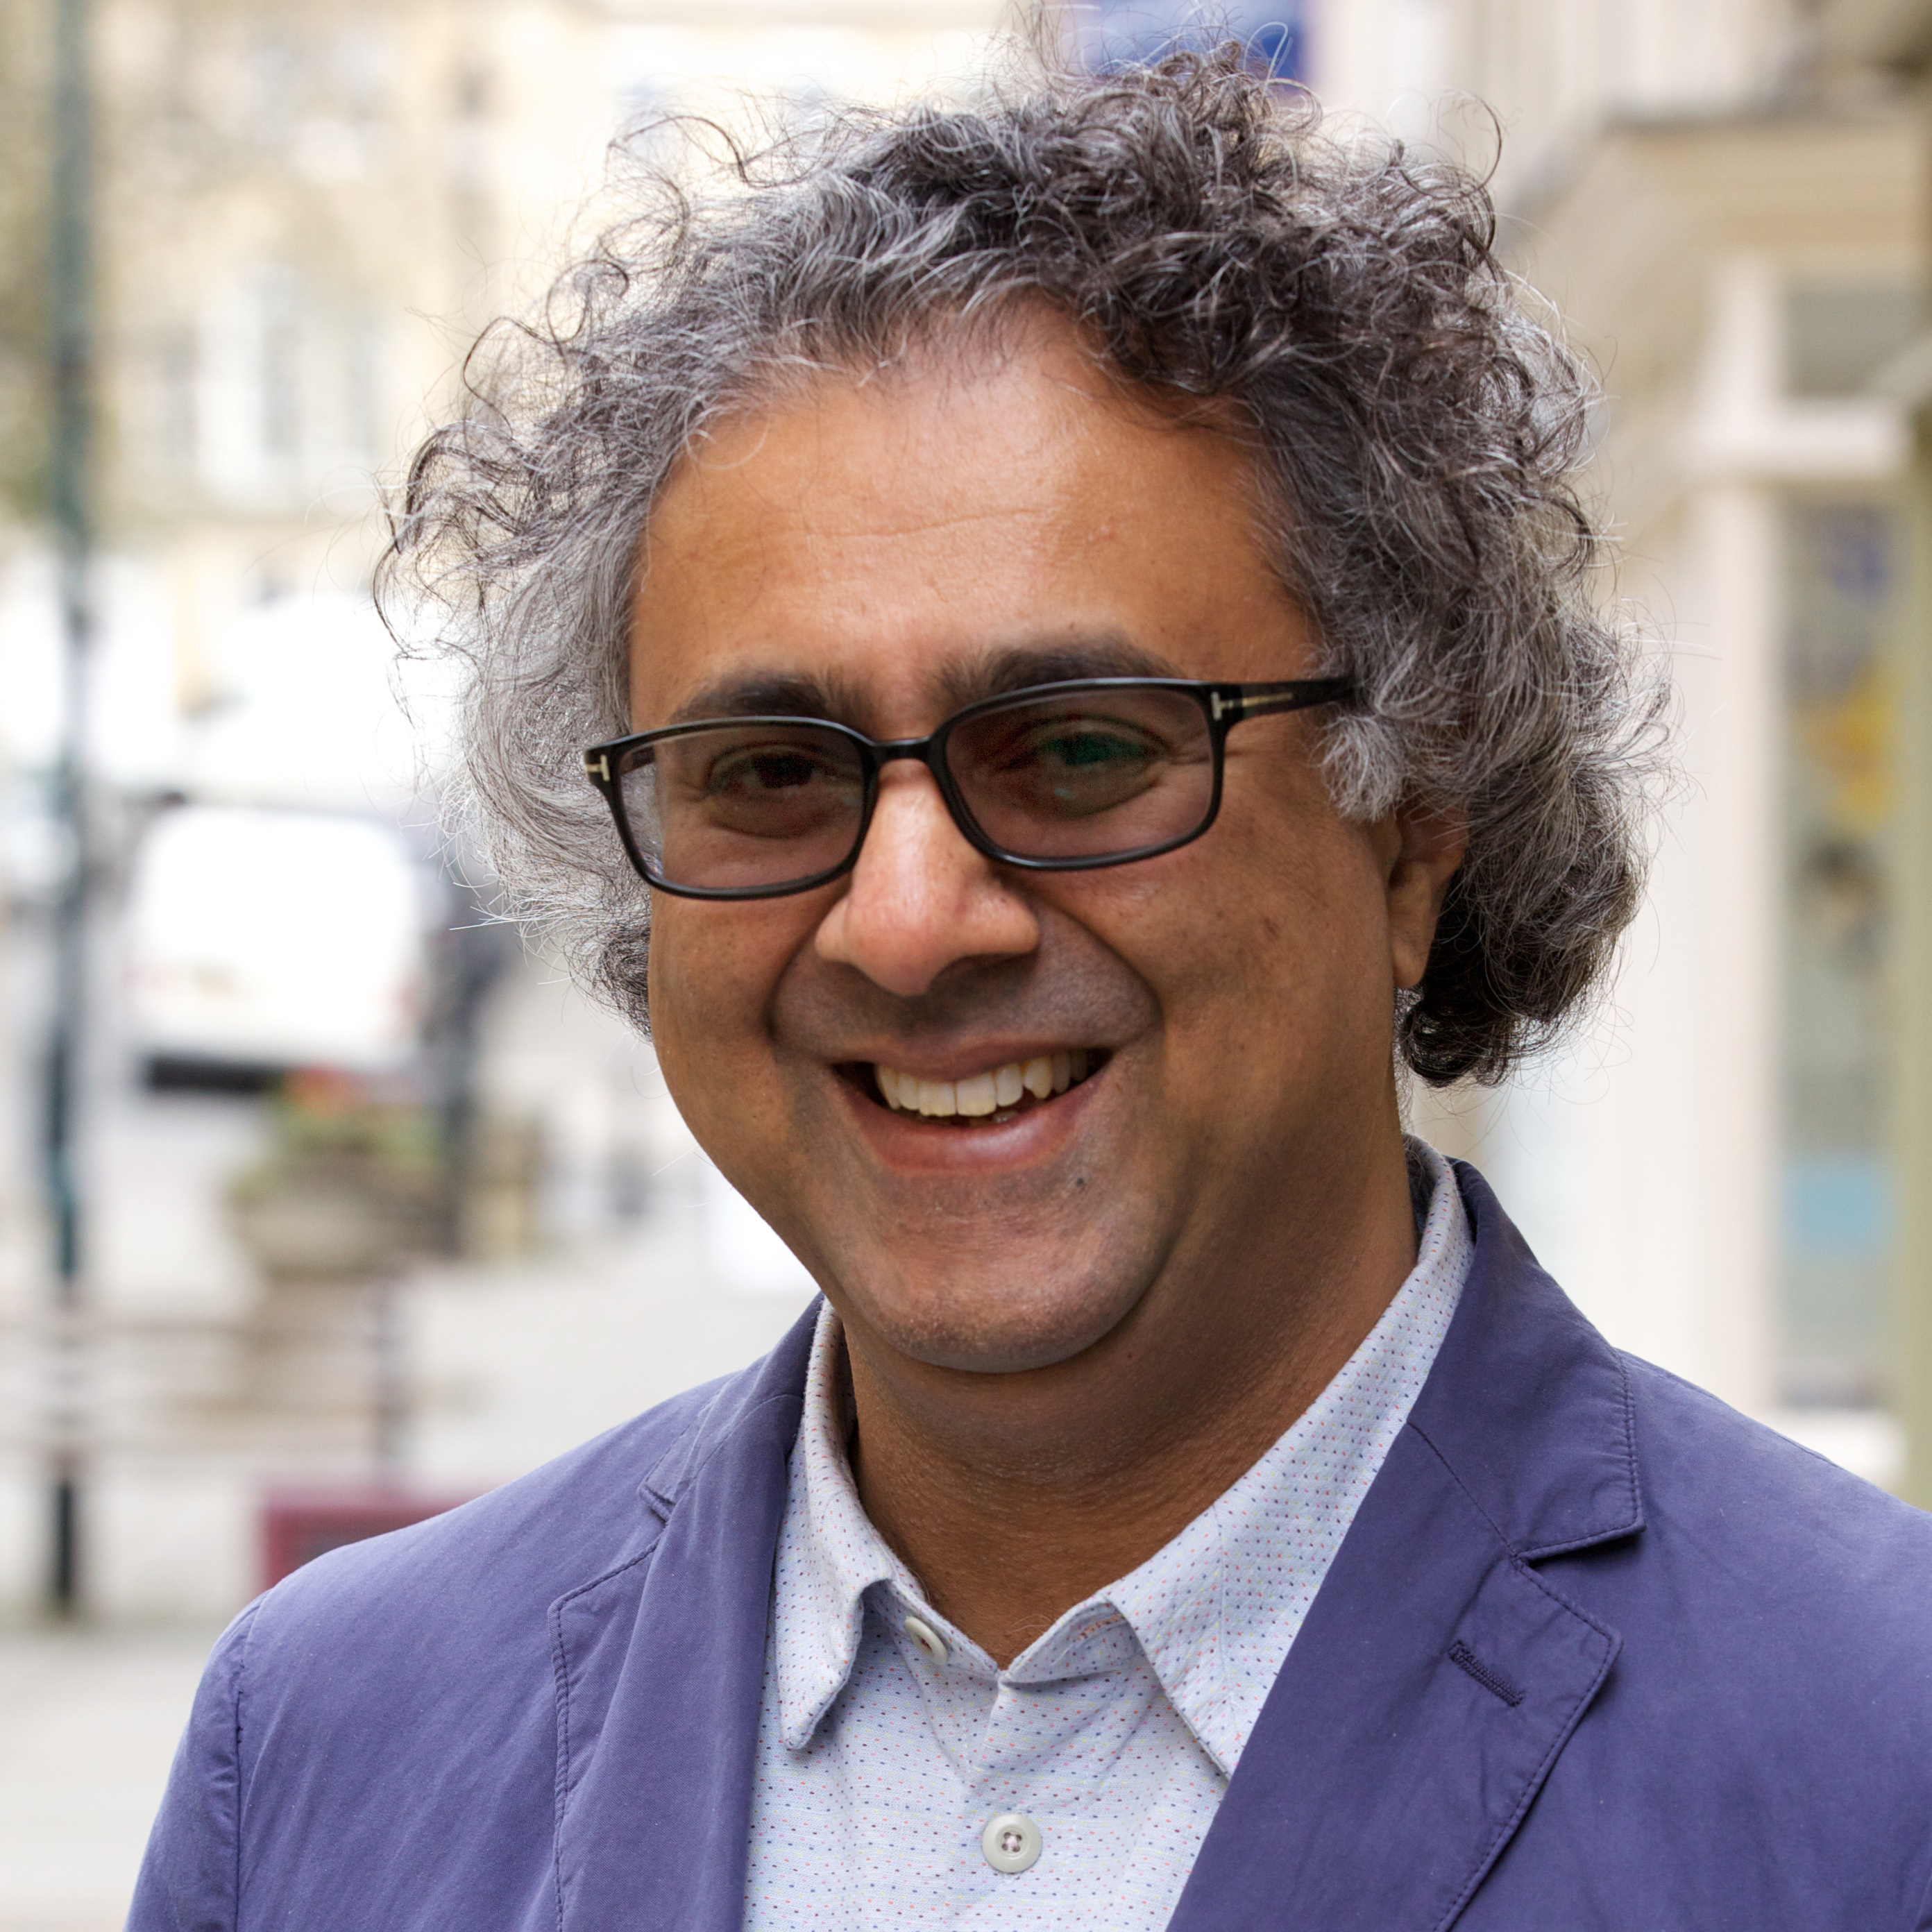 Photograph of Professor Avi Shankar in the city of Bath